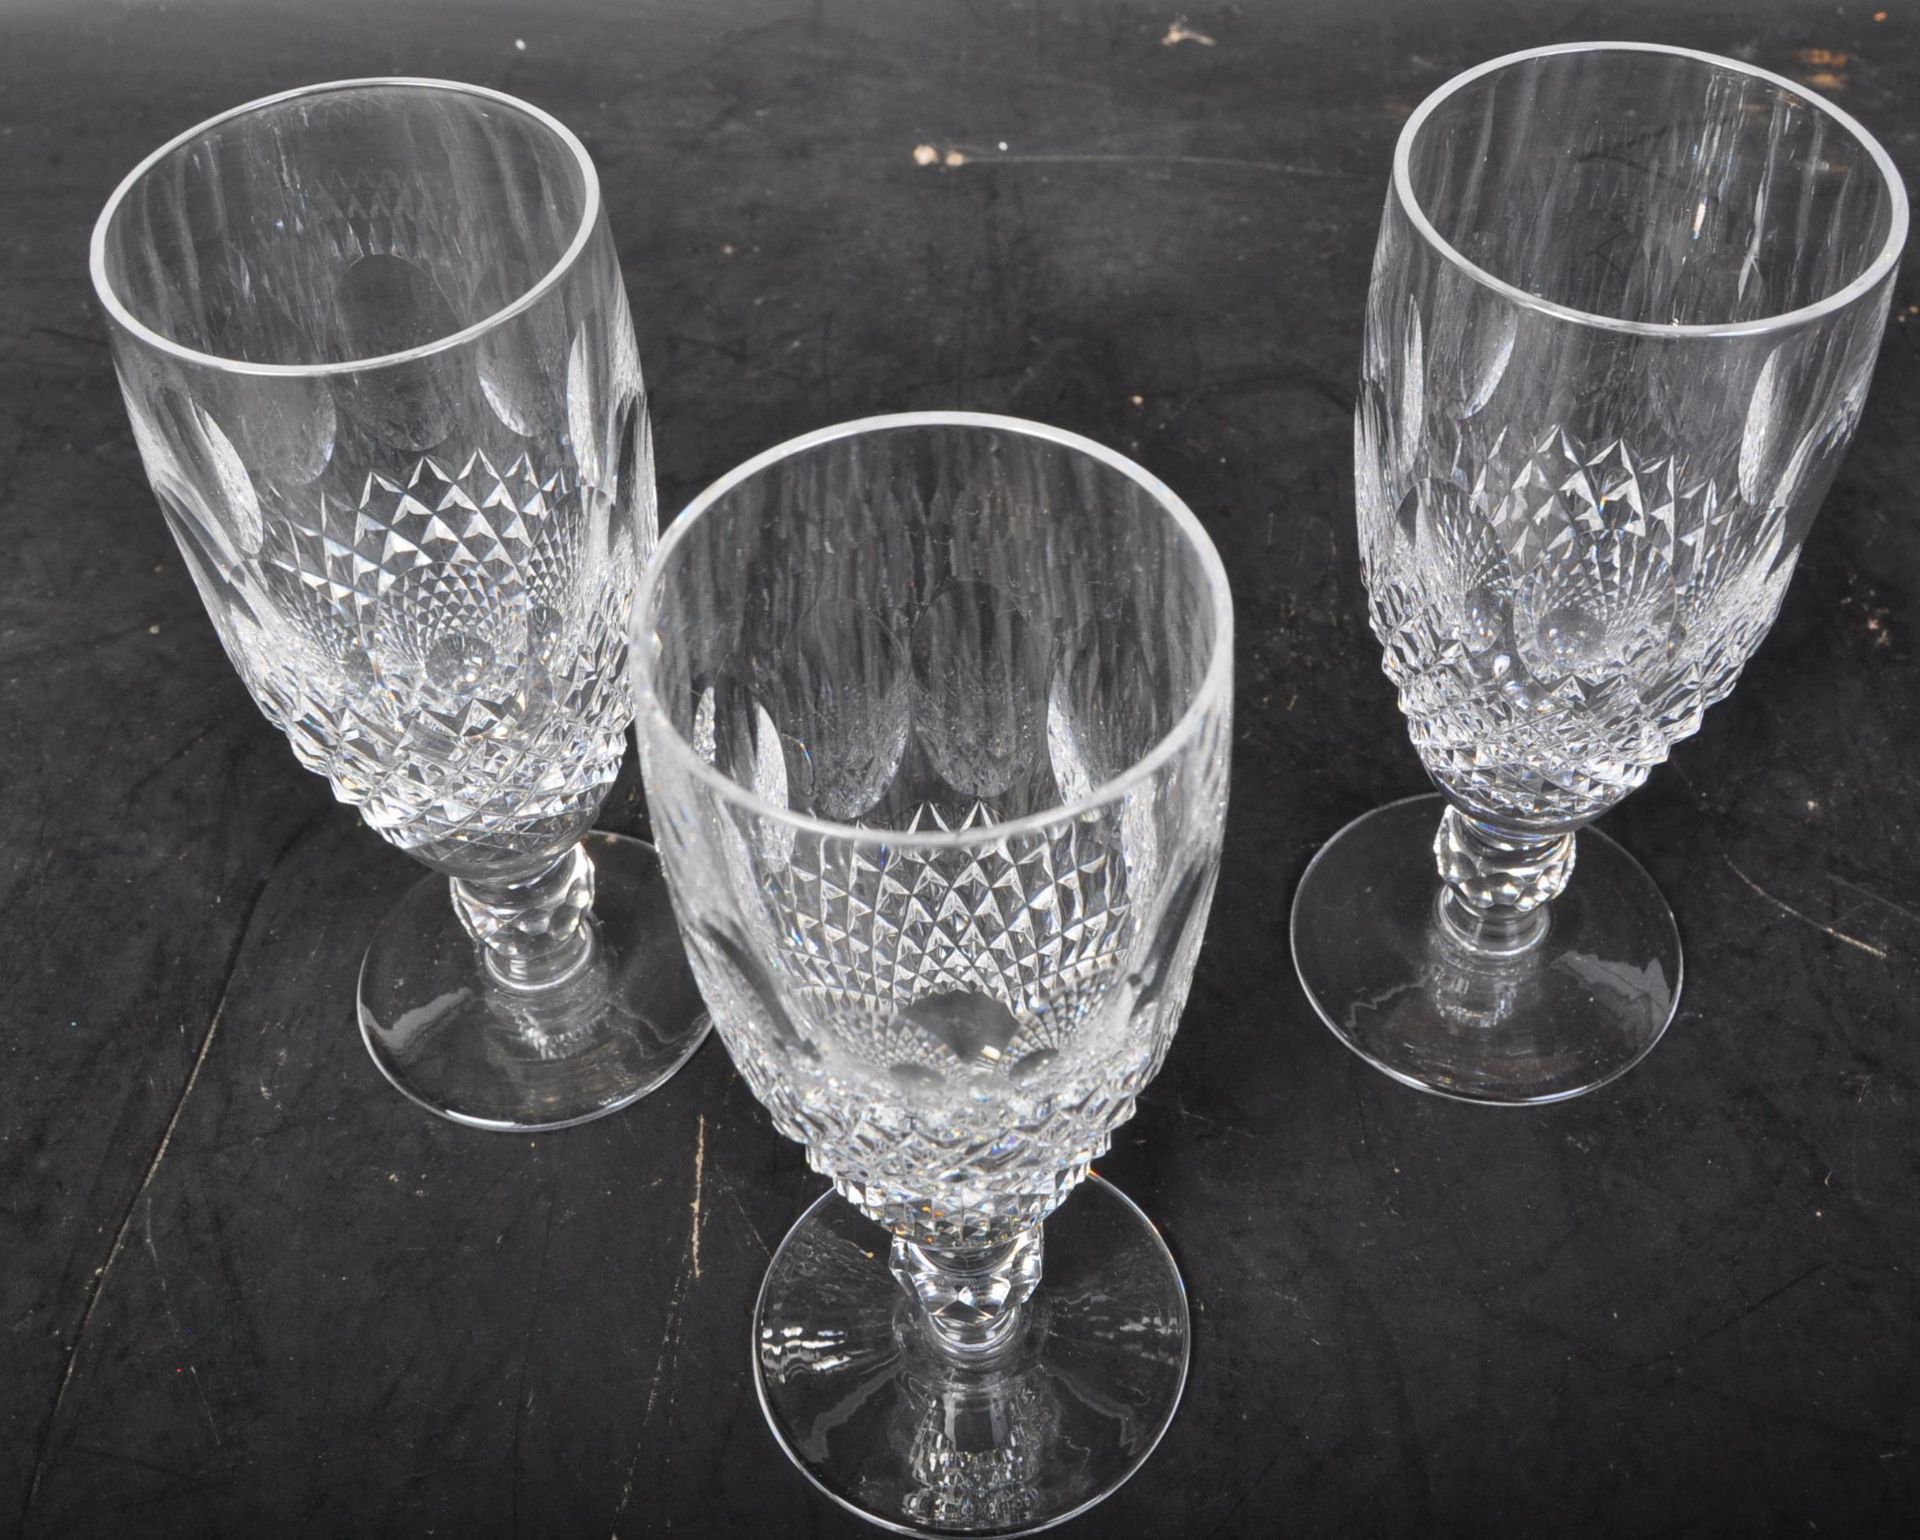 SIX VINTAGE WATERFORD CRYSTAL 'LISMORE' PILSNER GLASSES - Image 5 of 5